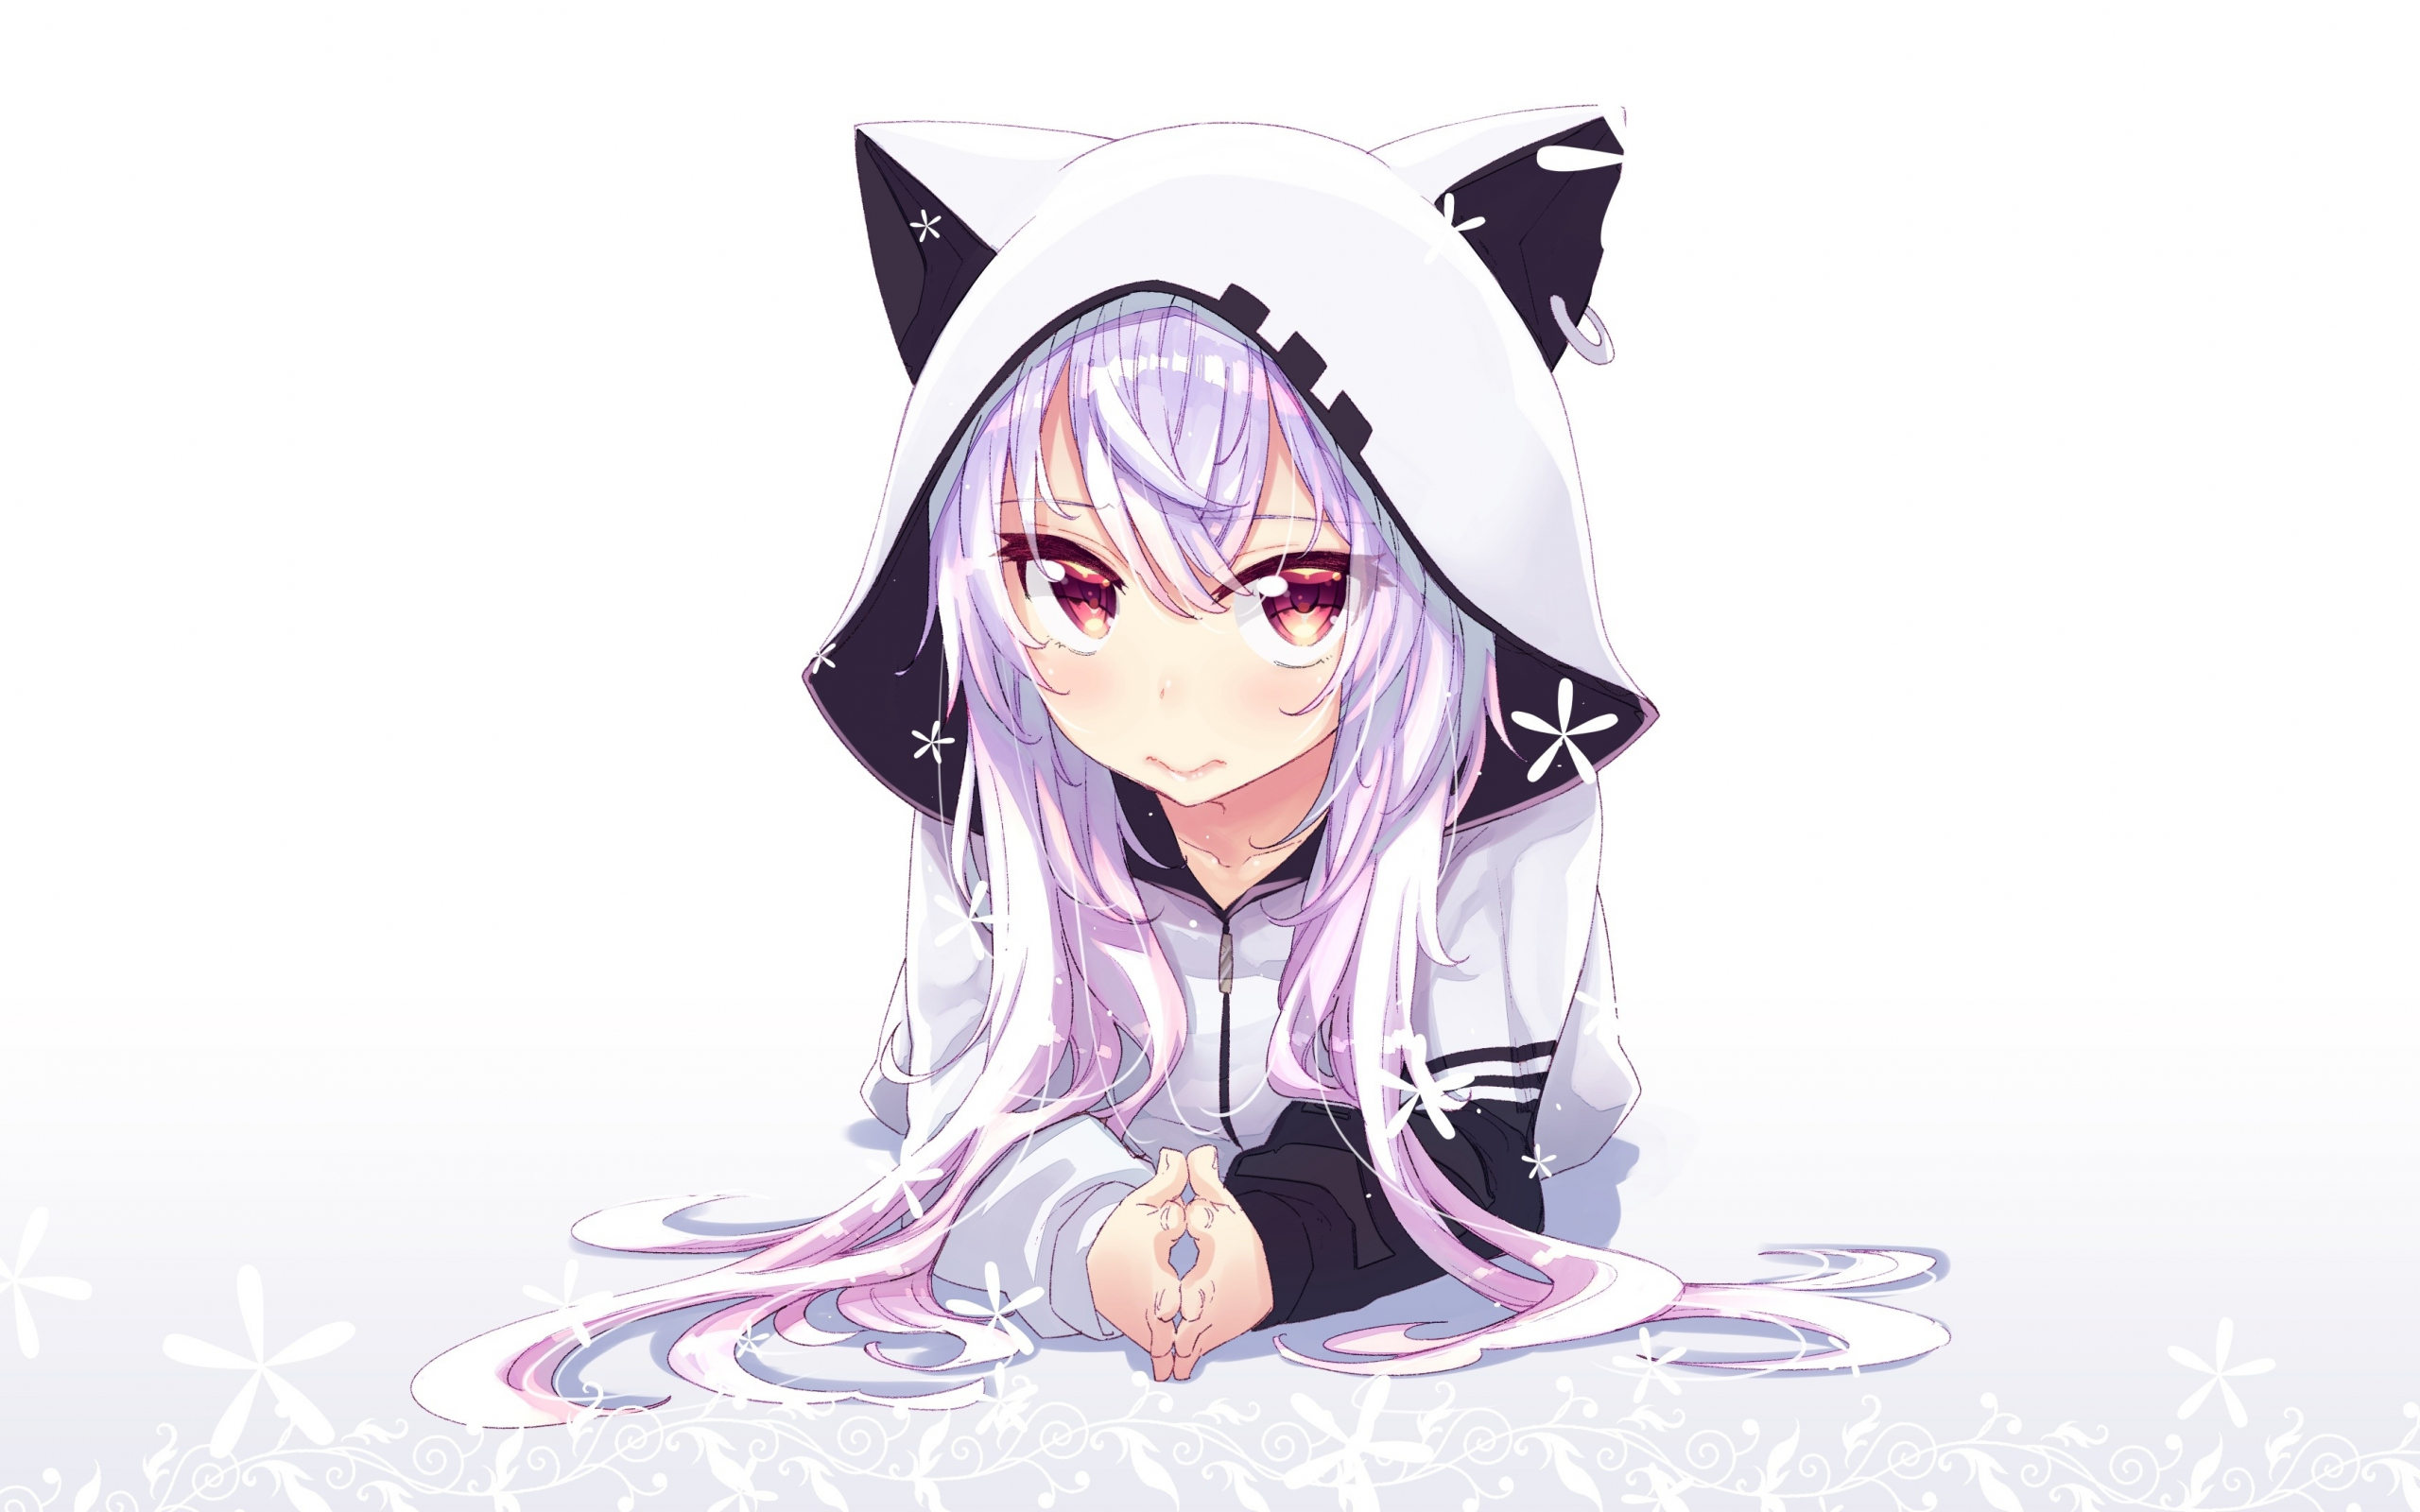 Download wallpaper 2560x1600 azuma lim, anime girl, white hoodie, dual wide  16:10 2560x1600 hd background, 7272